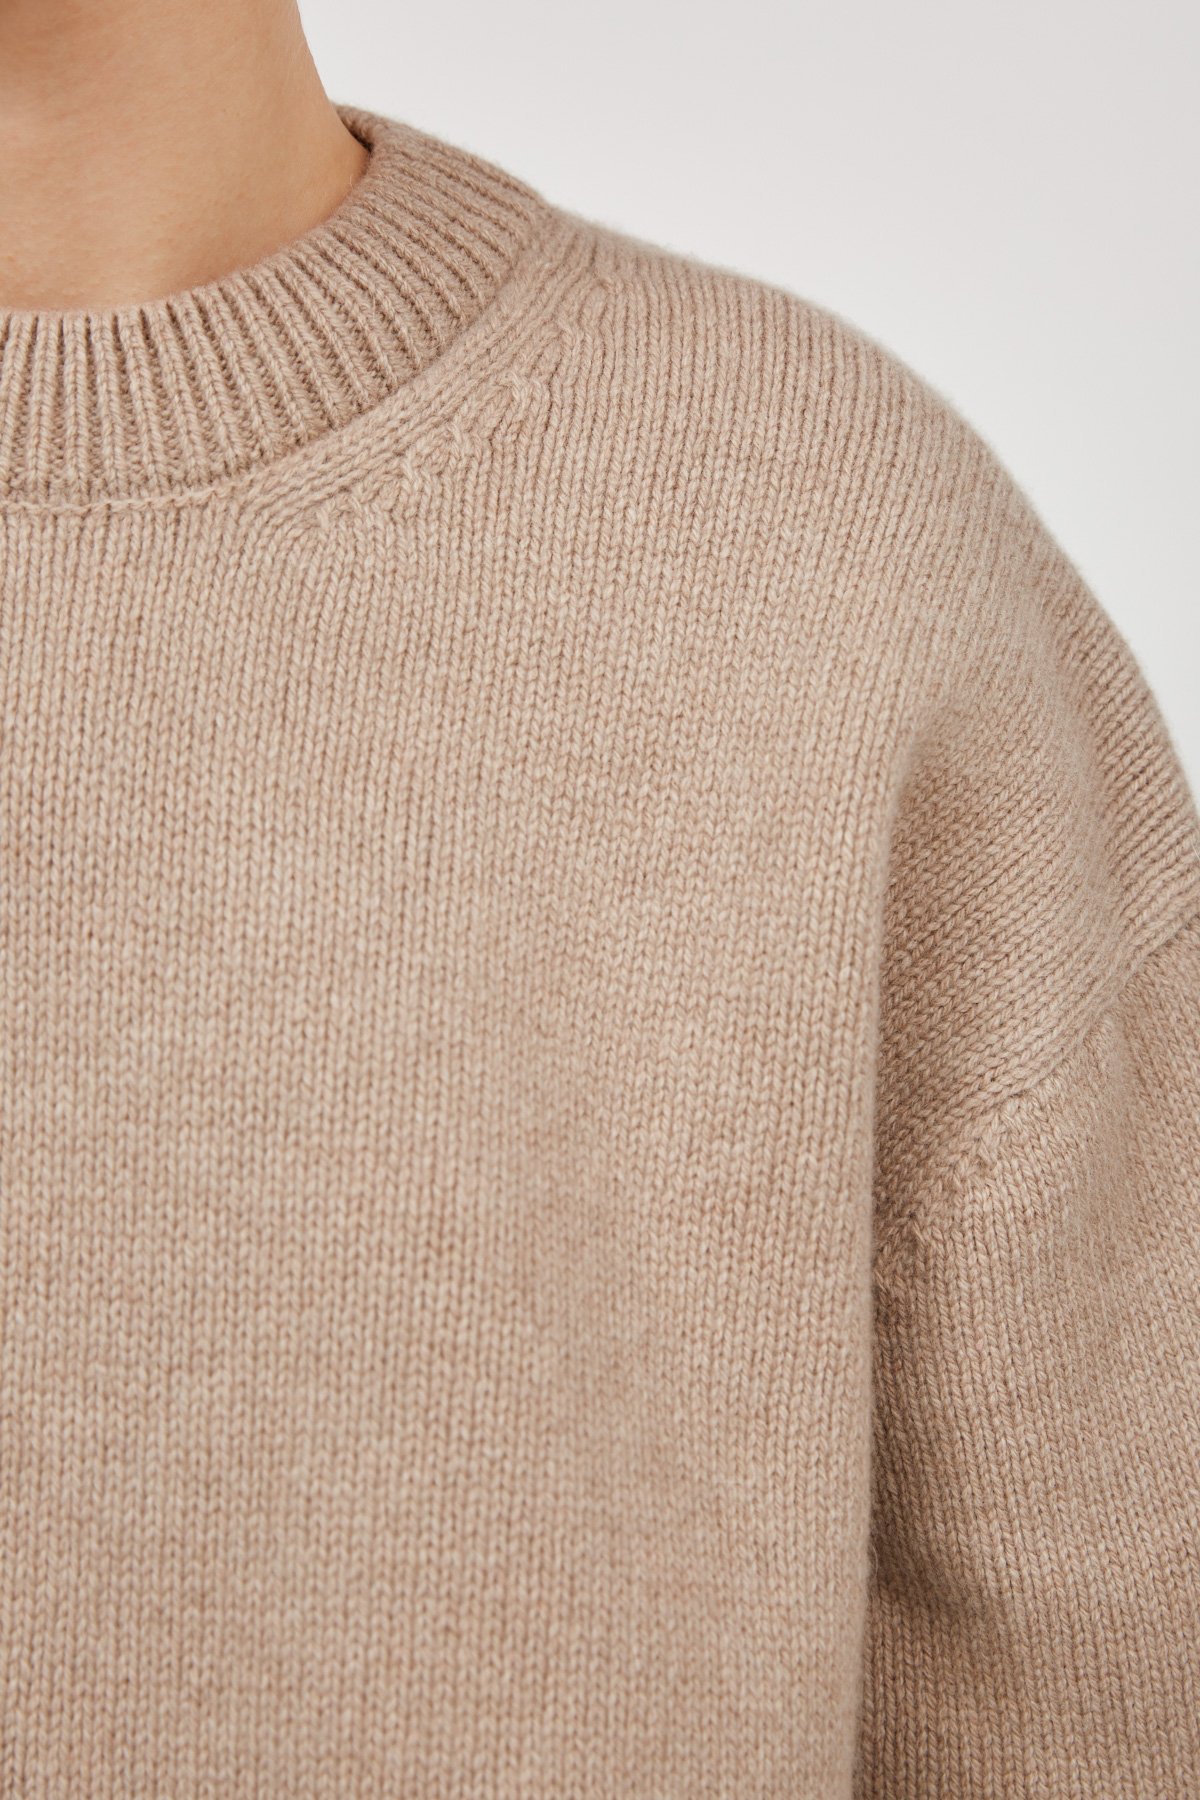 Beige cashmere sweater, photo 6